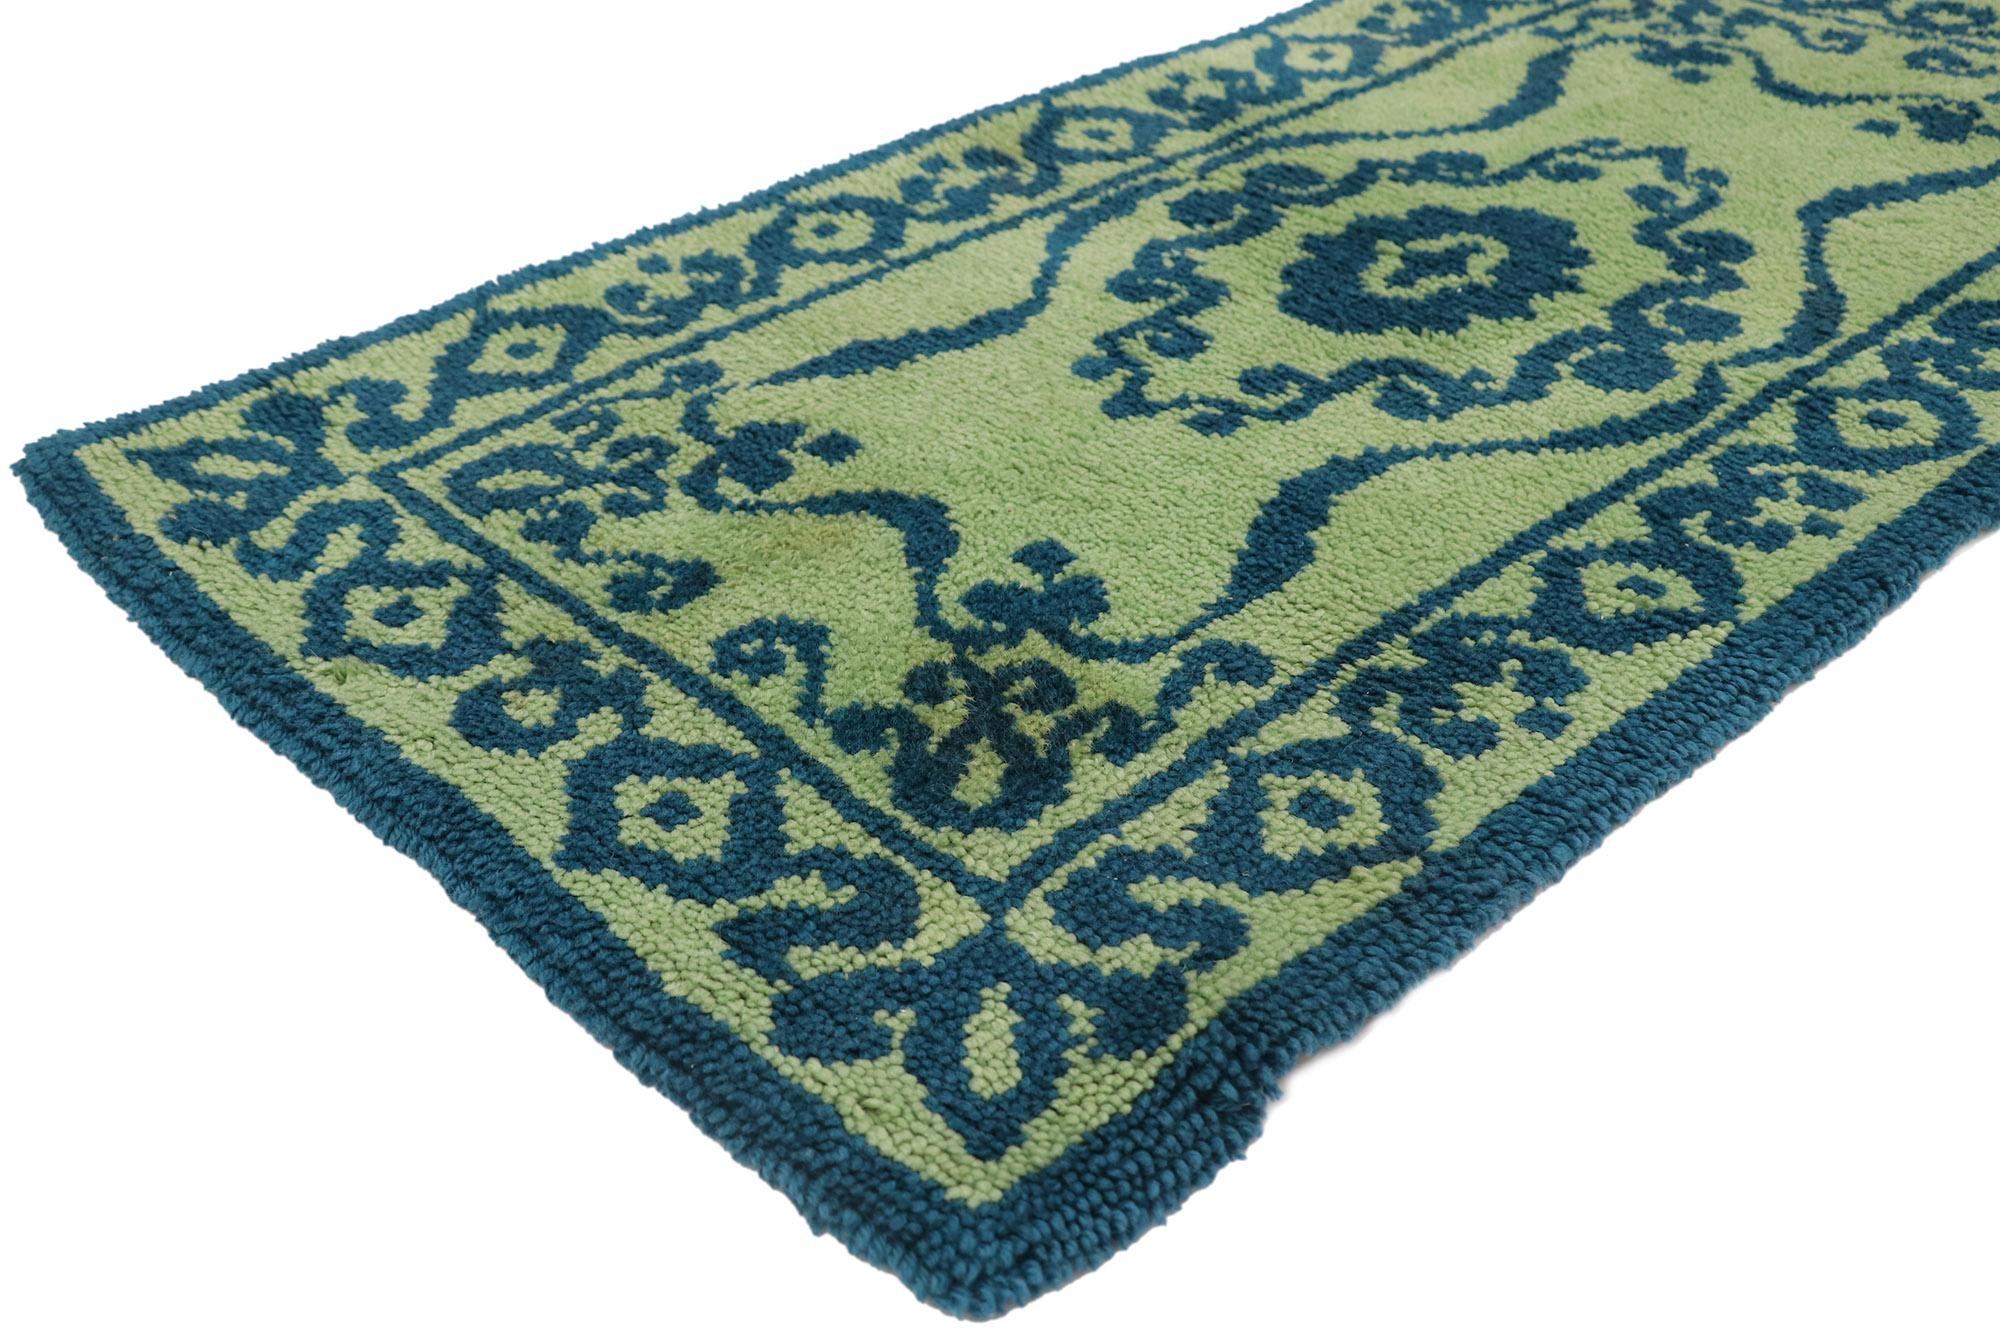 78111 Vintage green Swedish pile rug, 02'06 x 04'11.